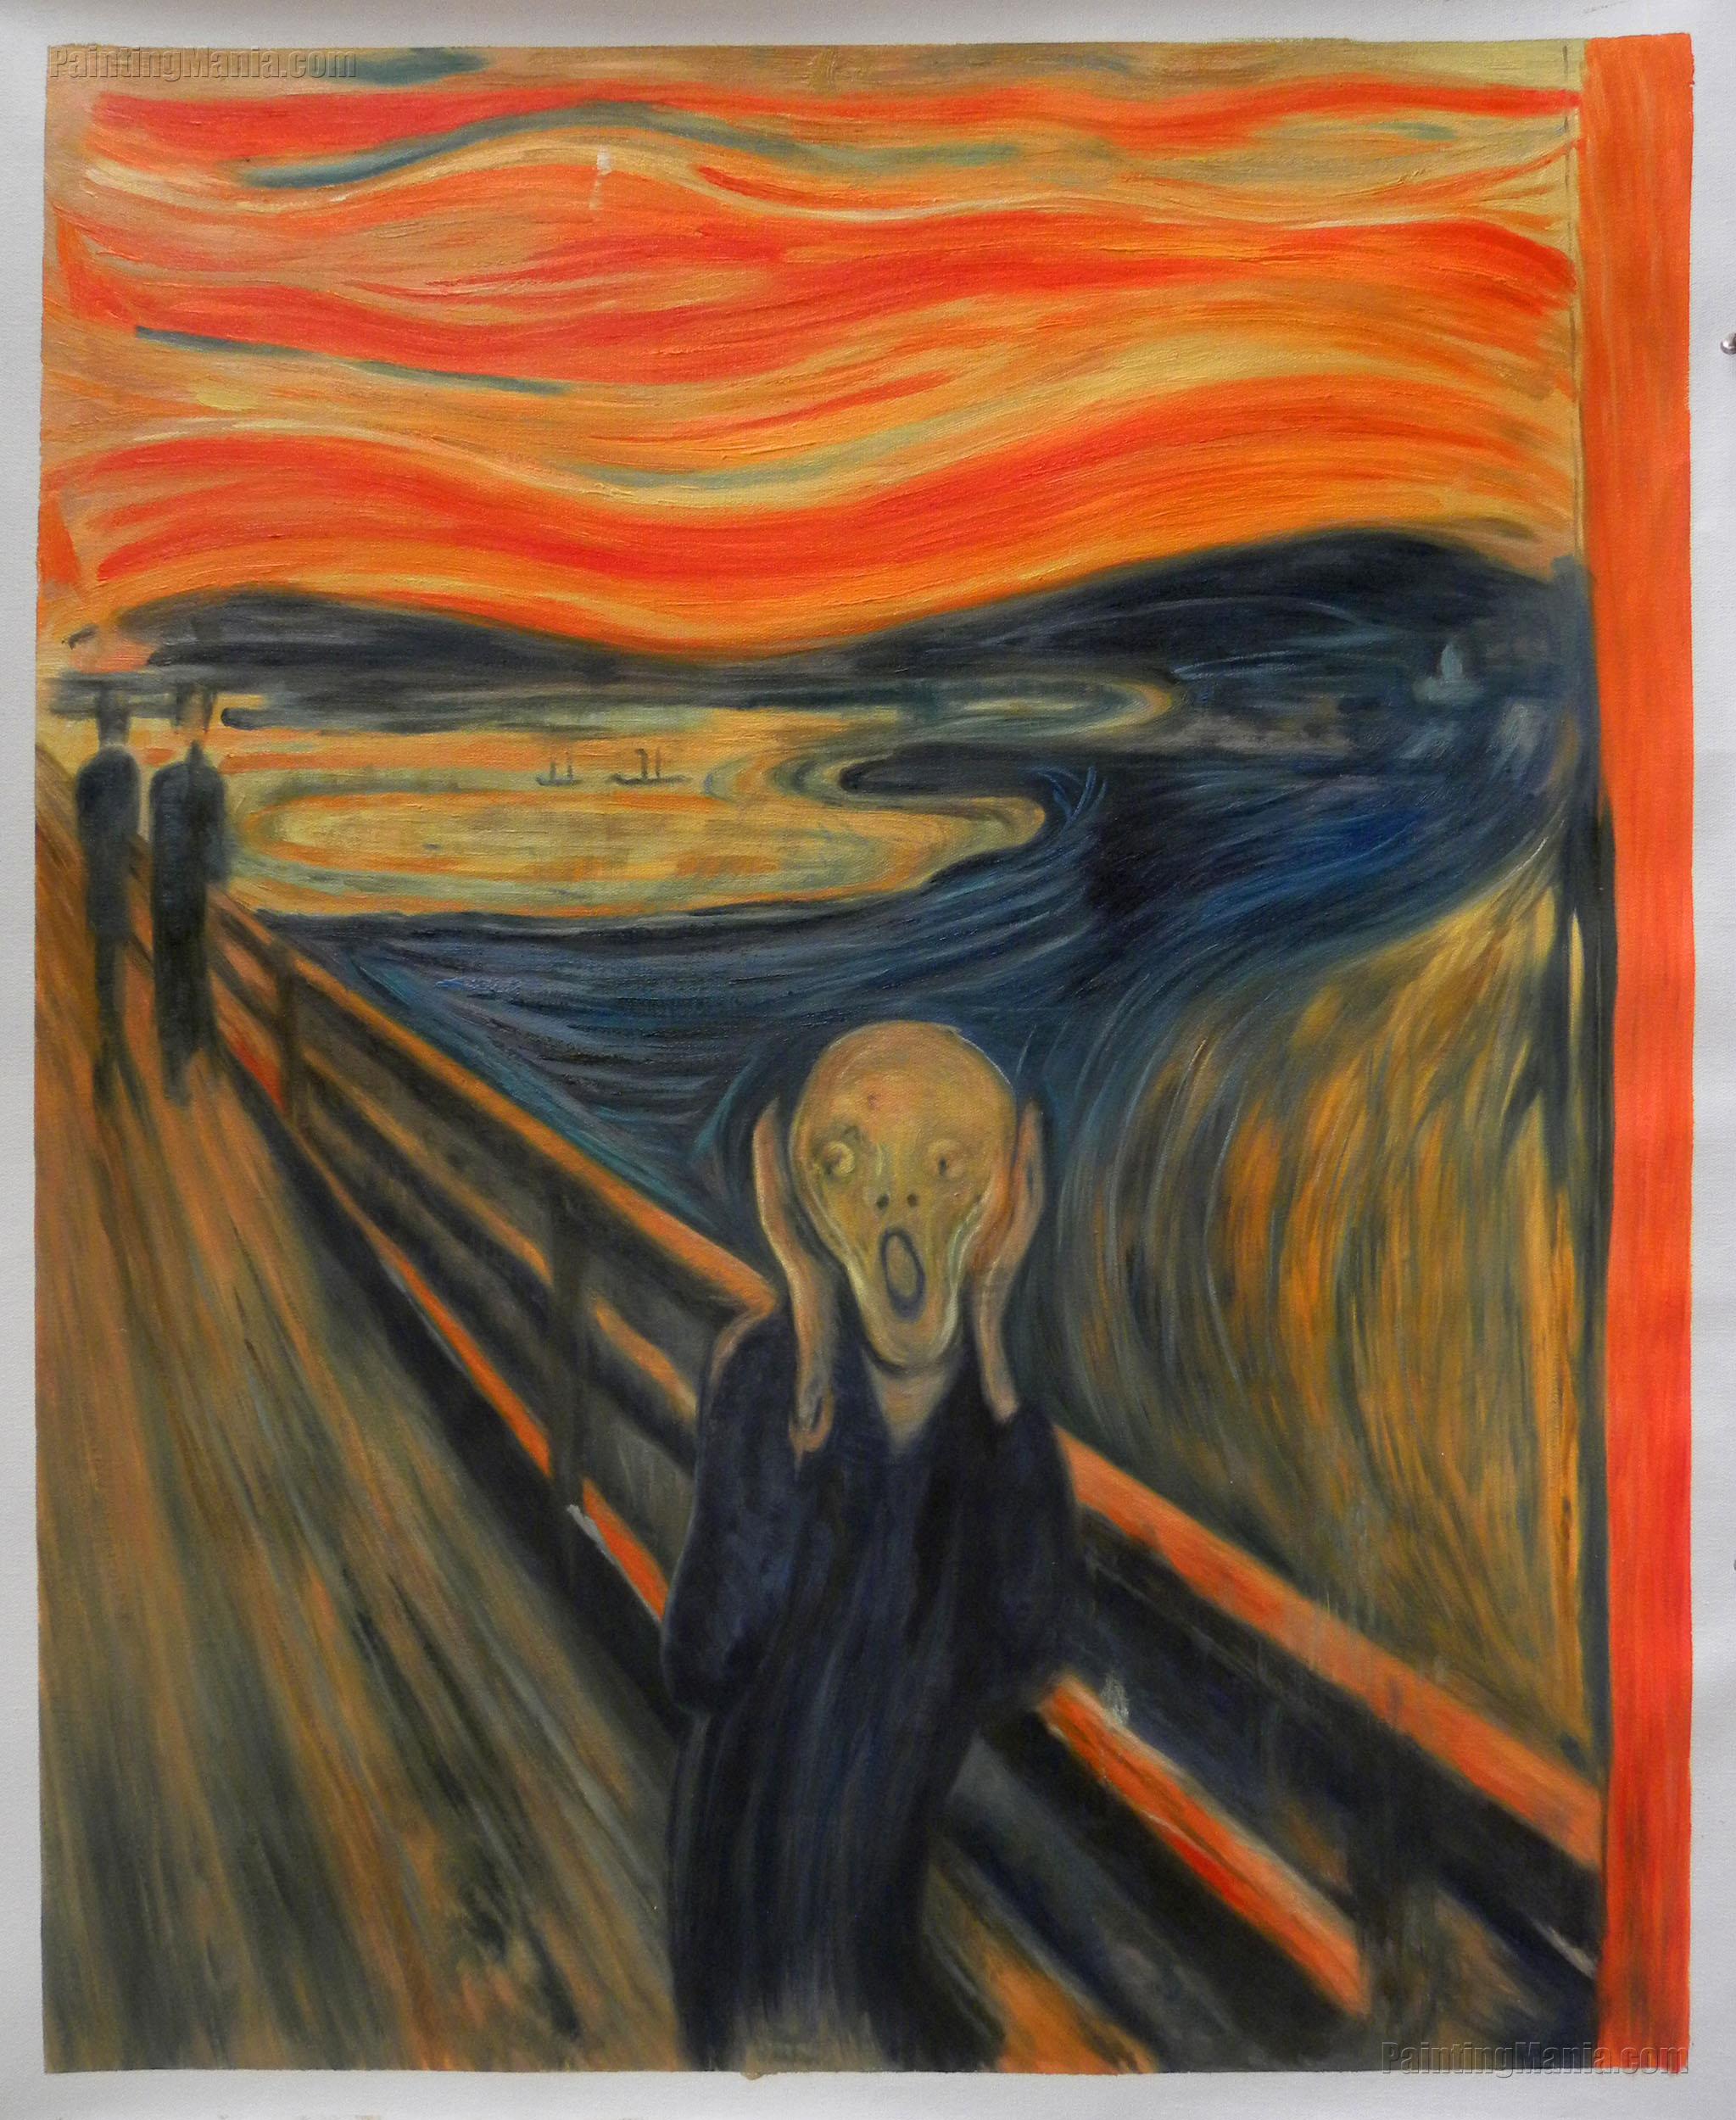 Edvard Munch's Scream